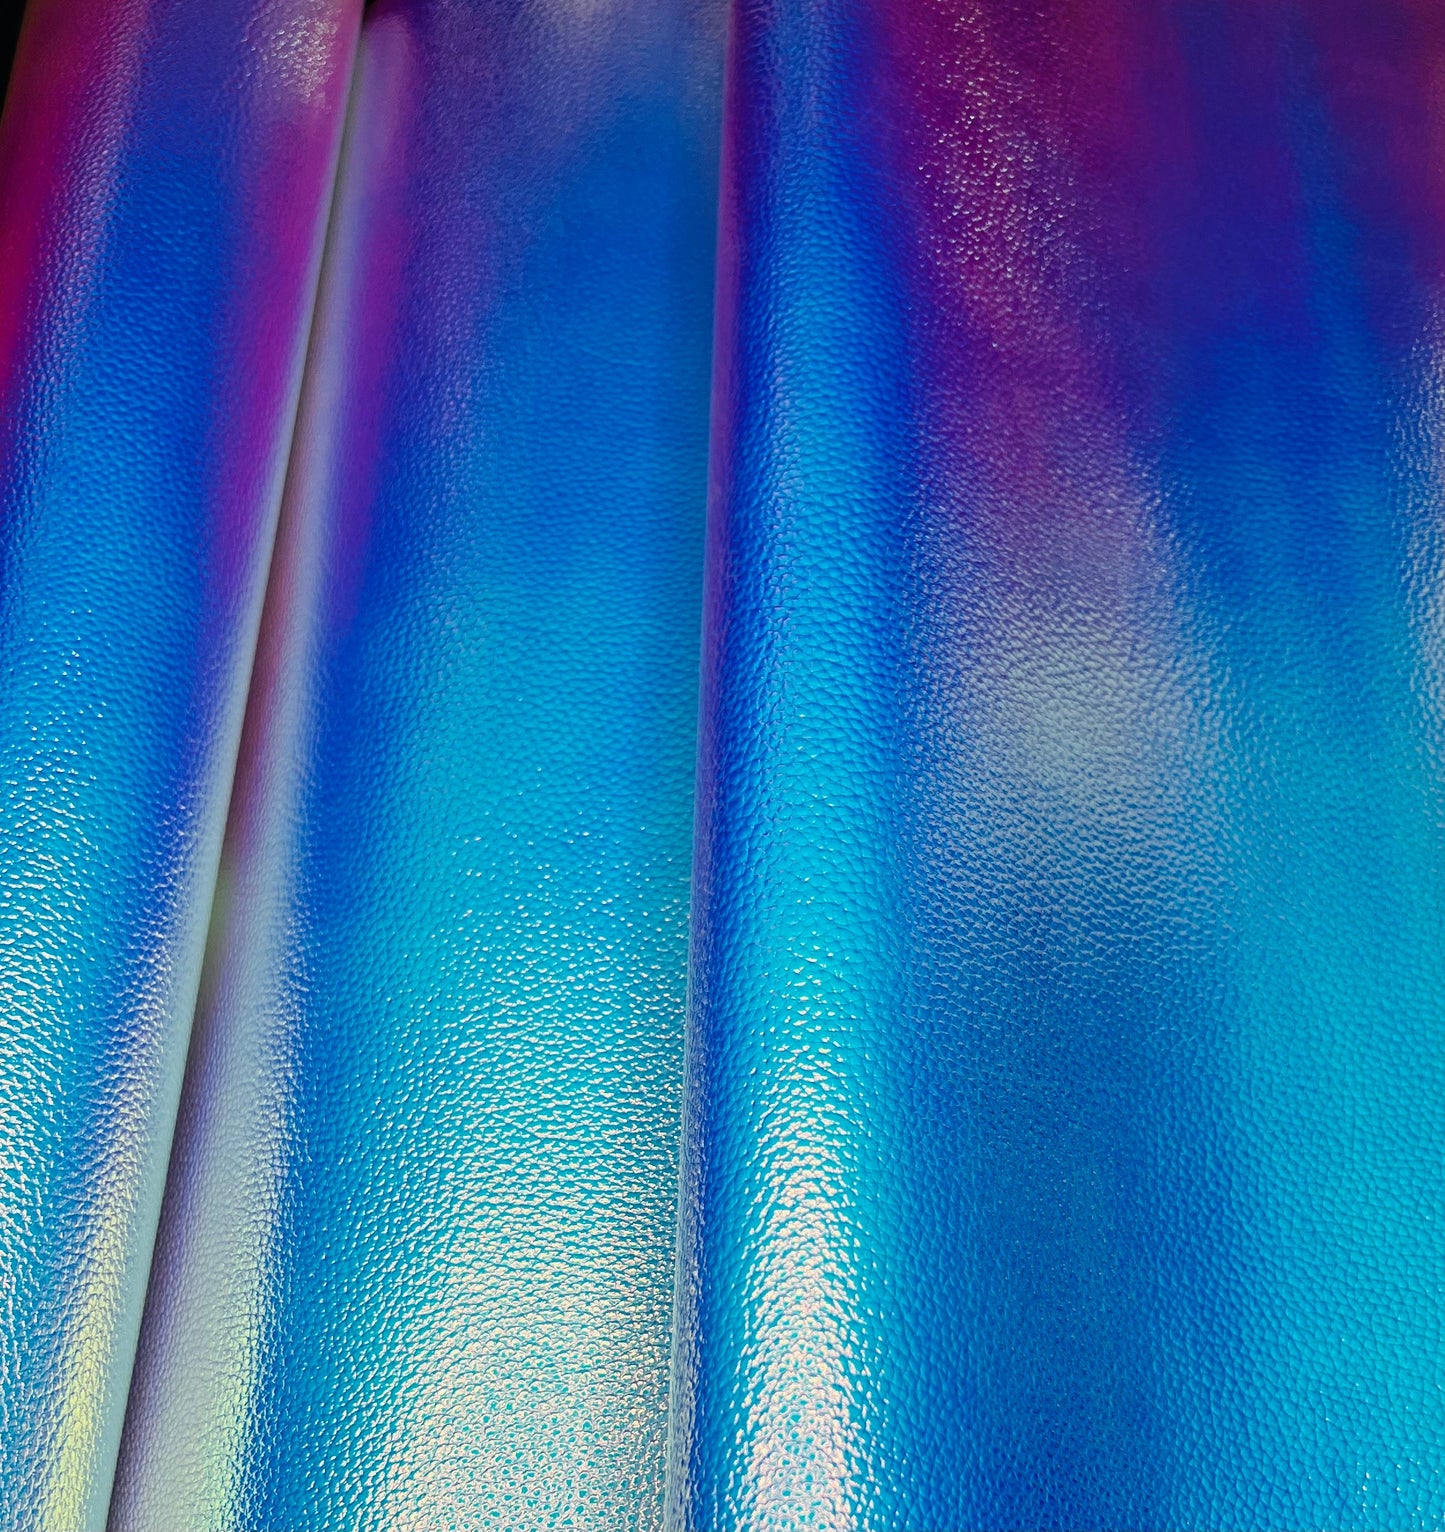 RETAIL Iridescent Textured .5mm Soft Back VINYL